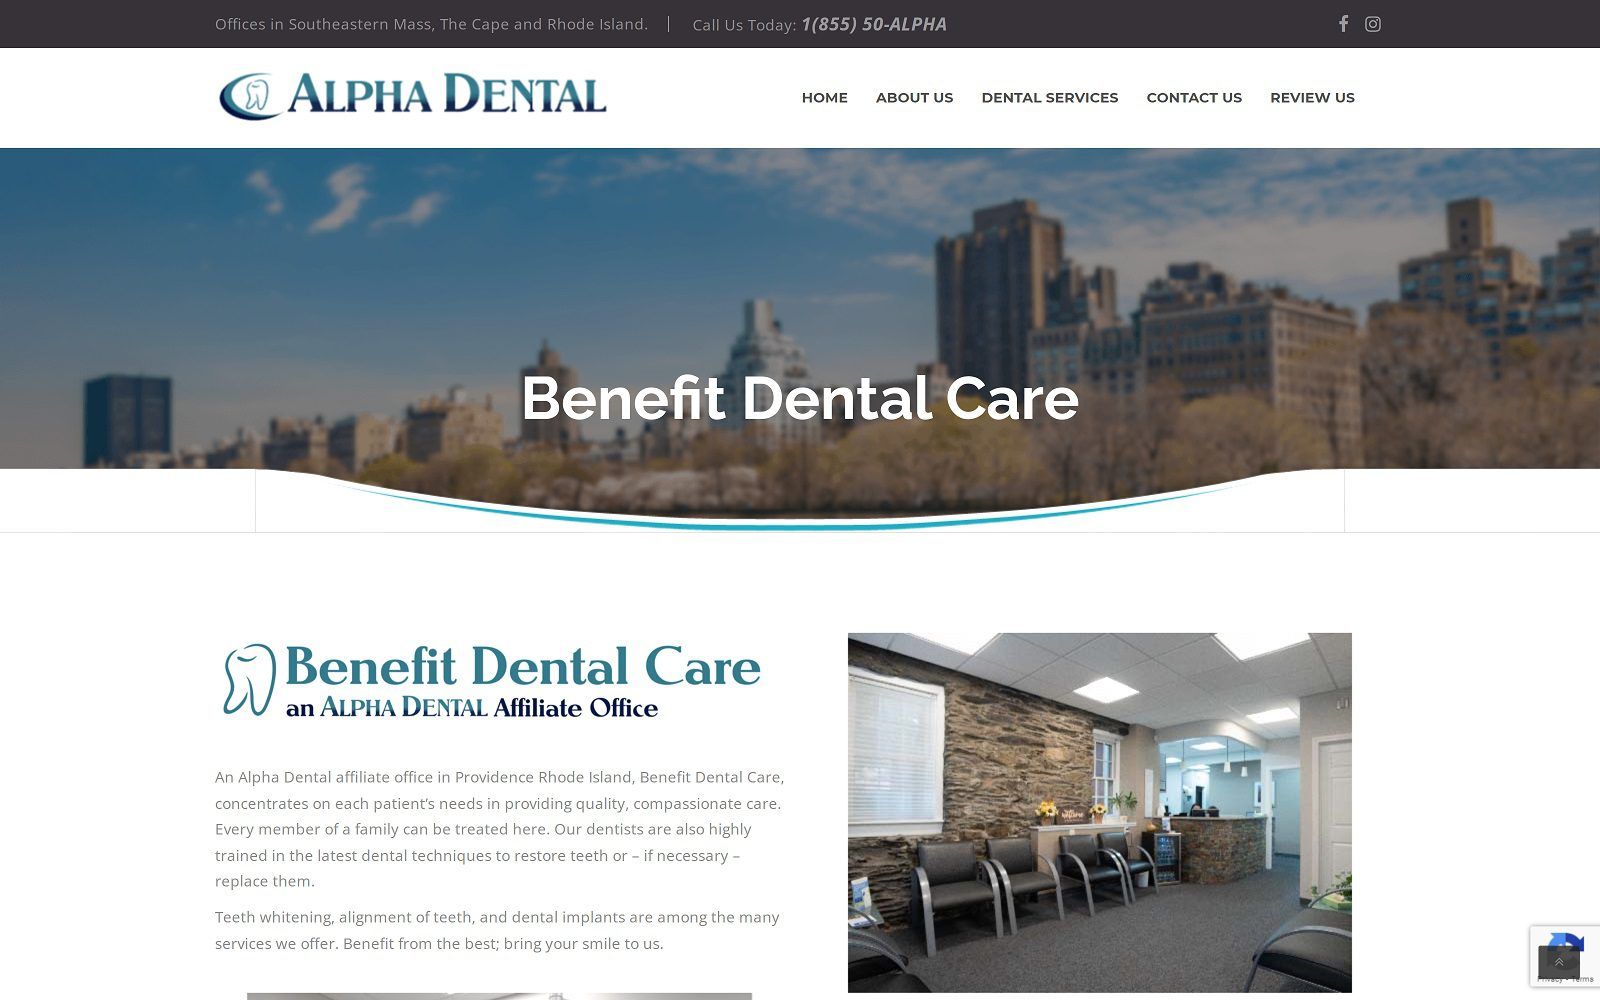 The screenshot of benefit dental care website